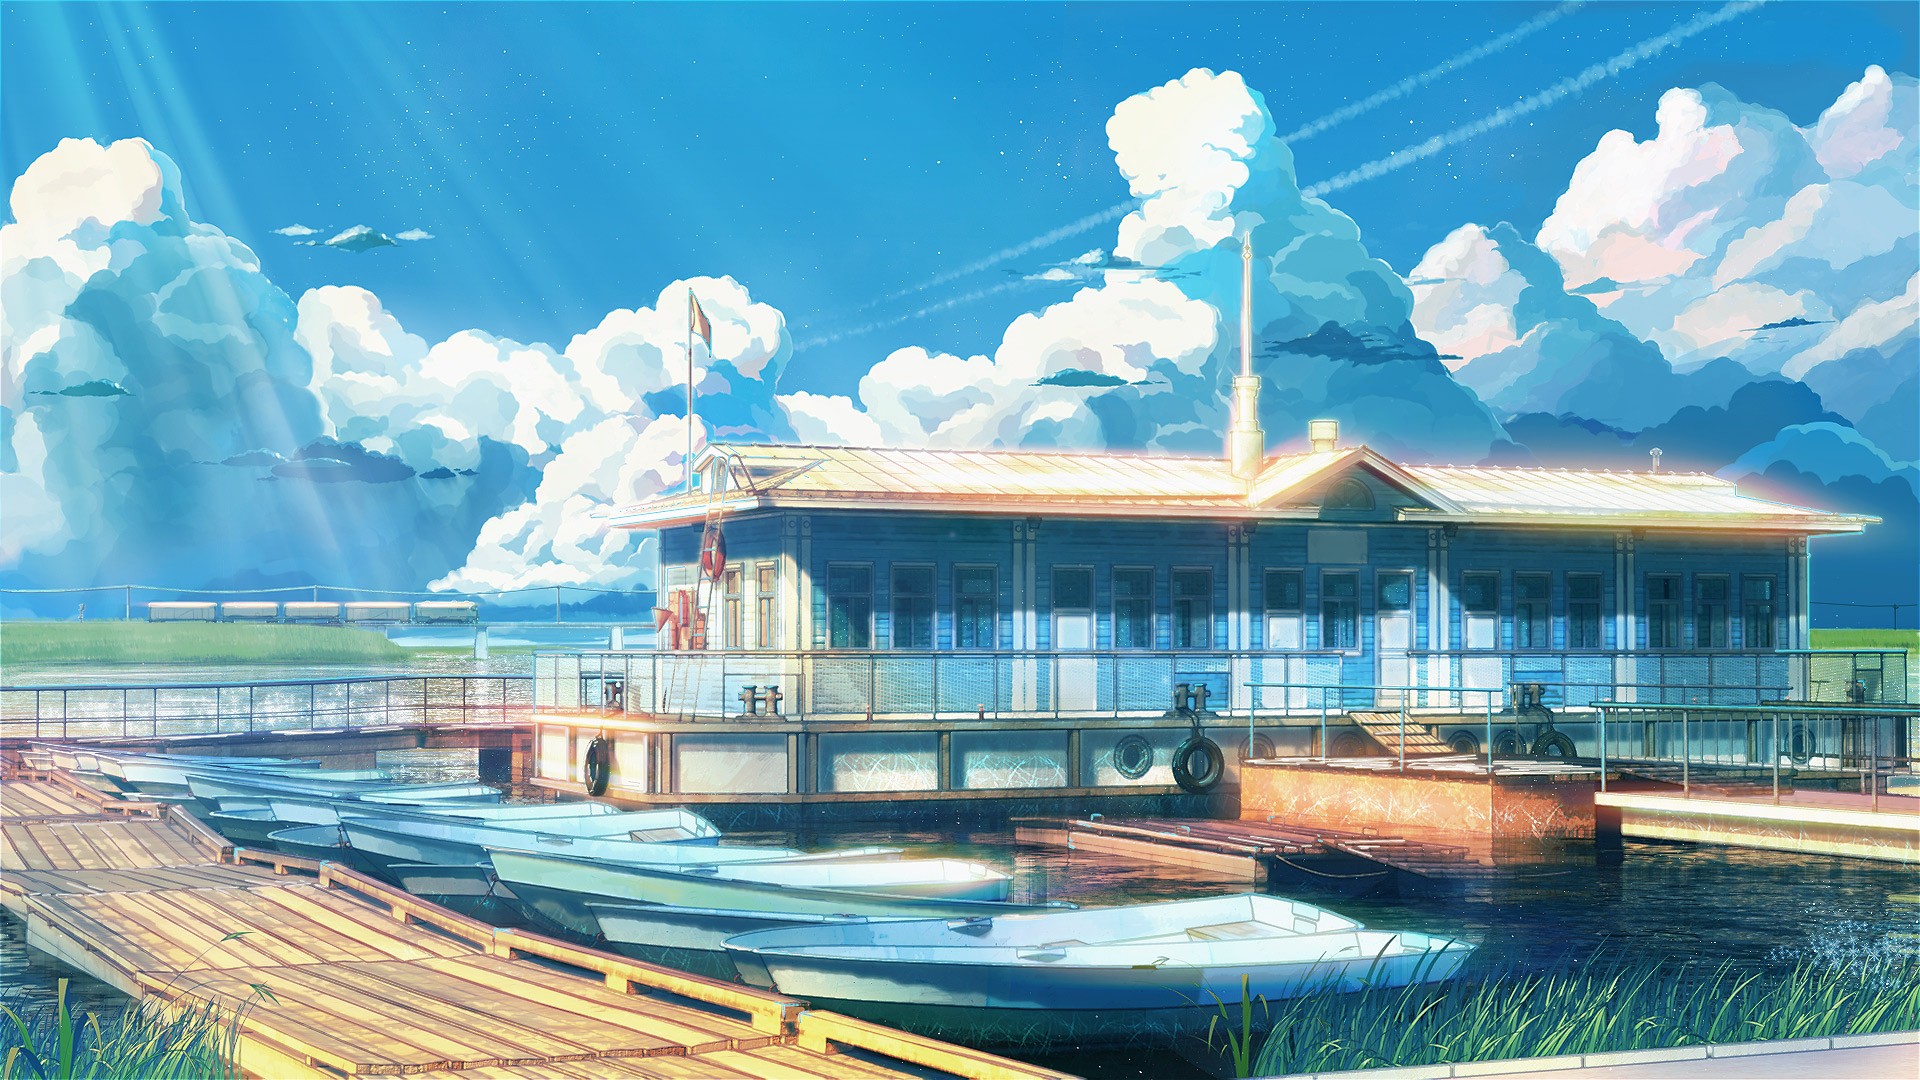 Anime 1920x1080 Everlasting Summer sunlight ArseniXC house pier sky clouds boat vehicle anime